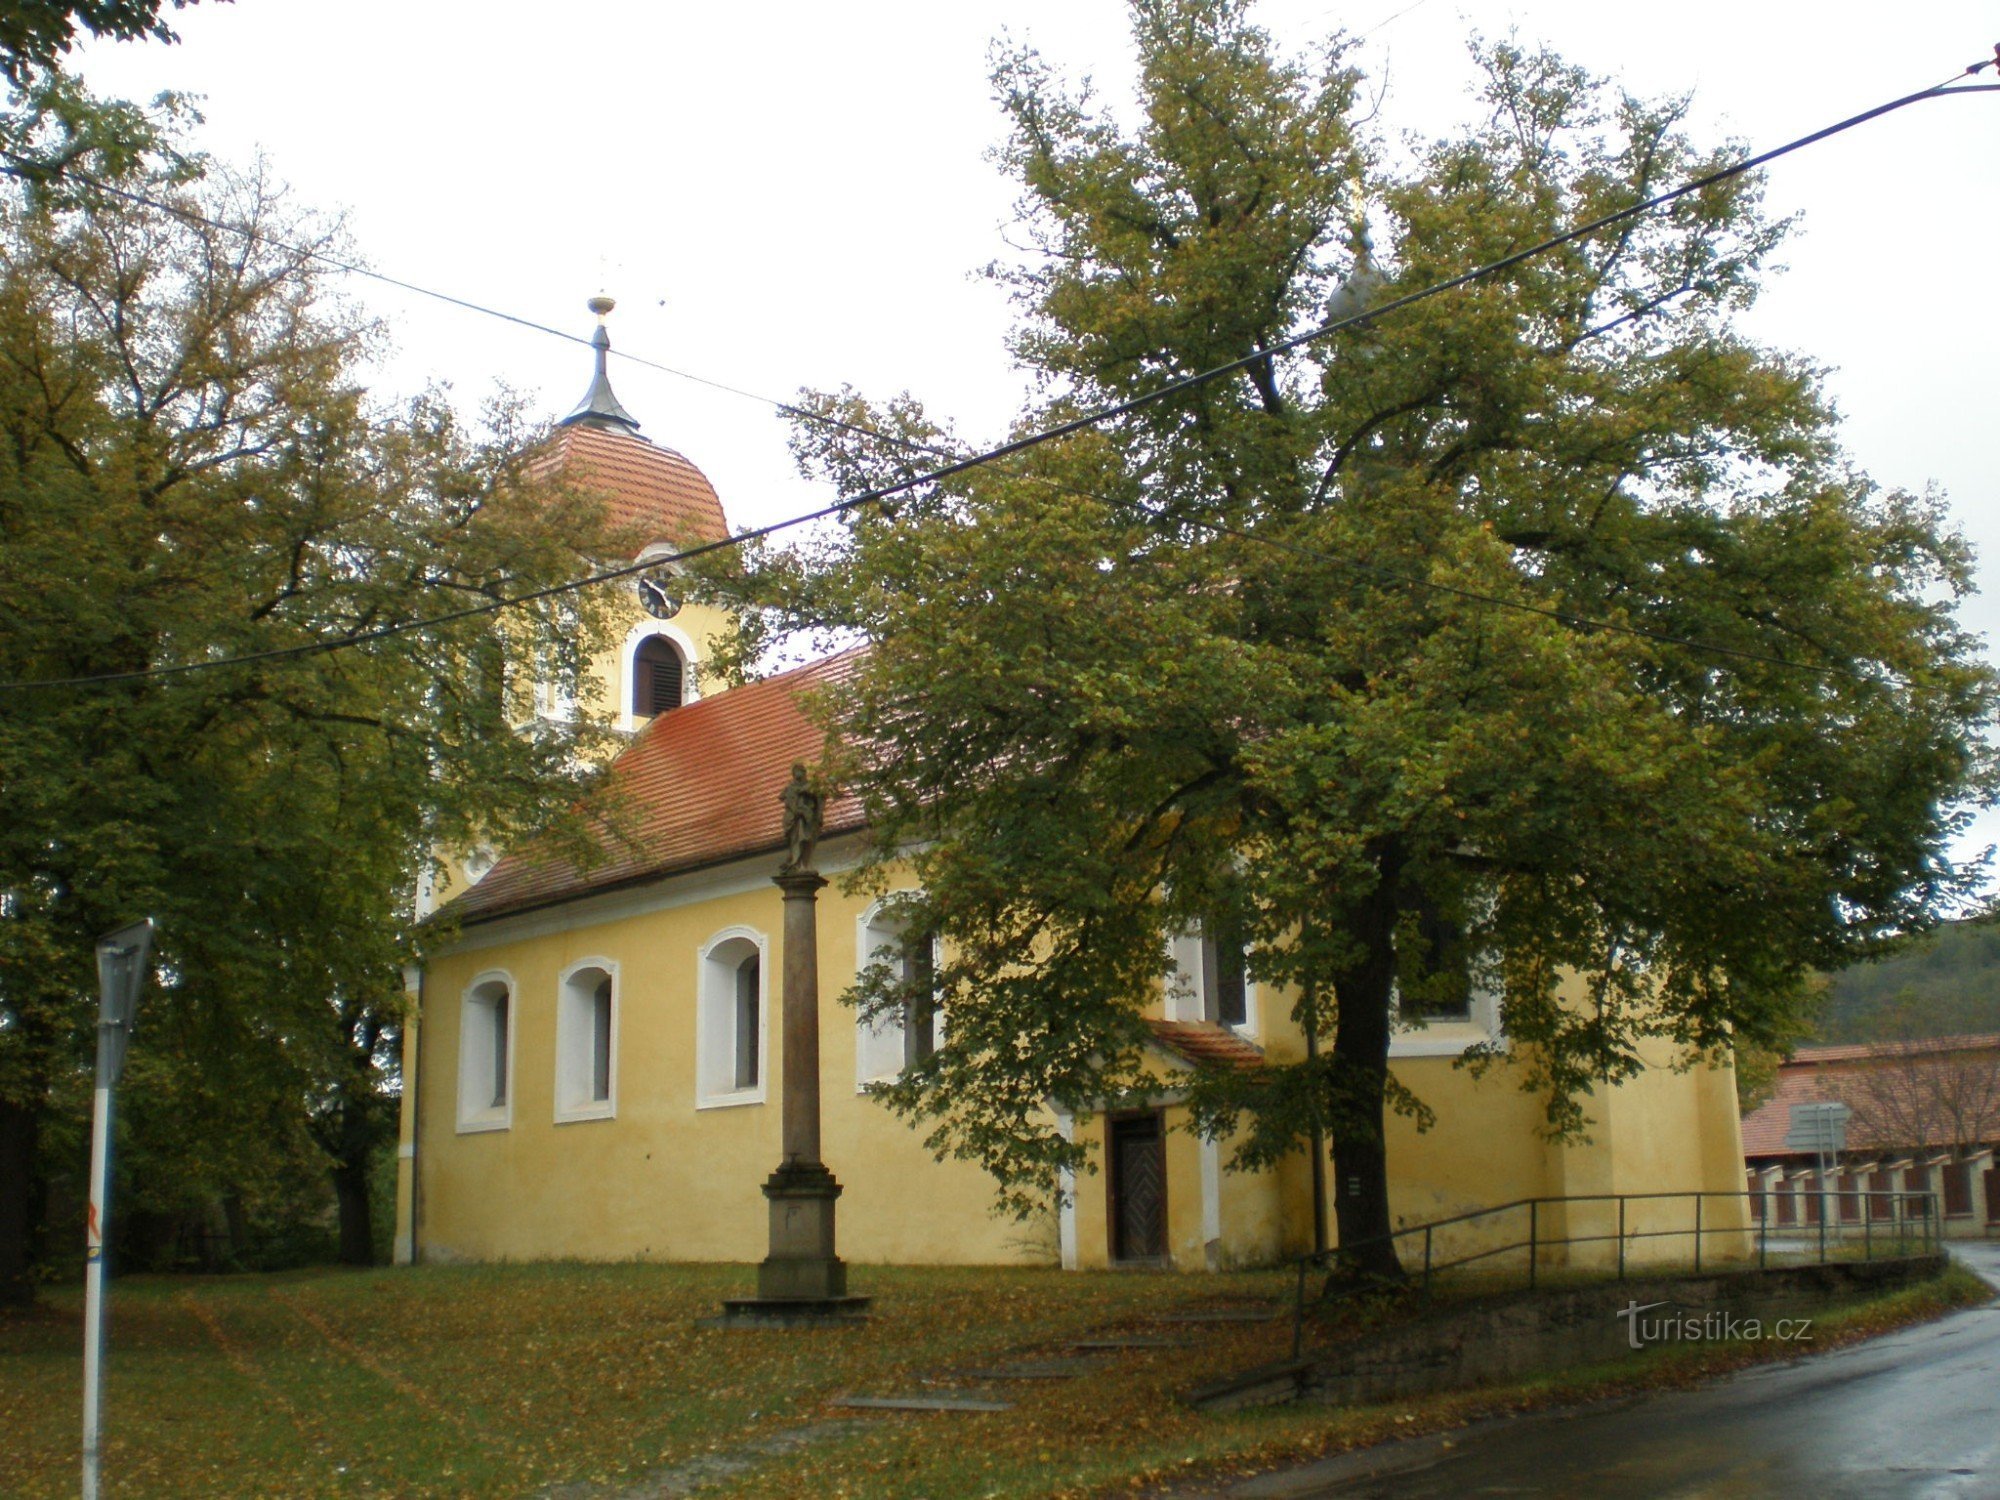 Lochovice - biserica Sf. Andrew